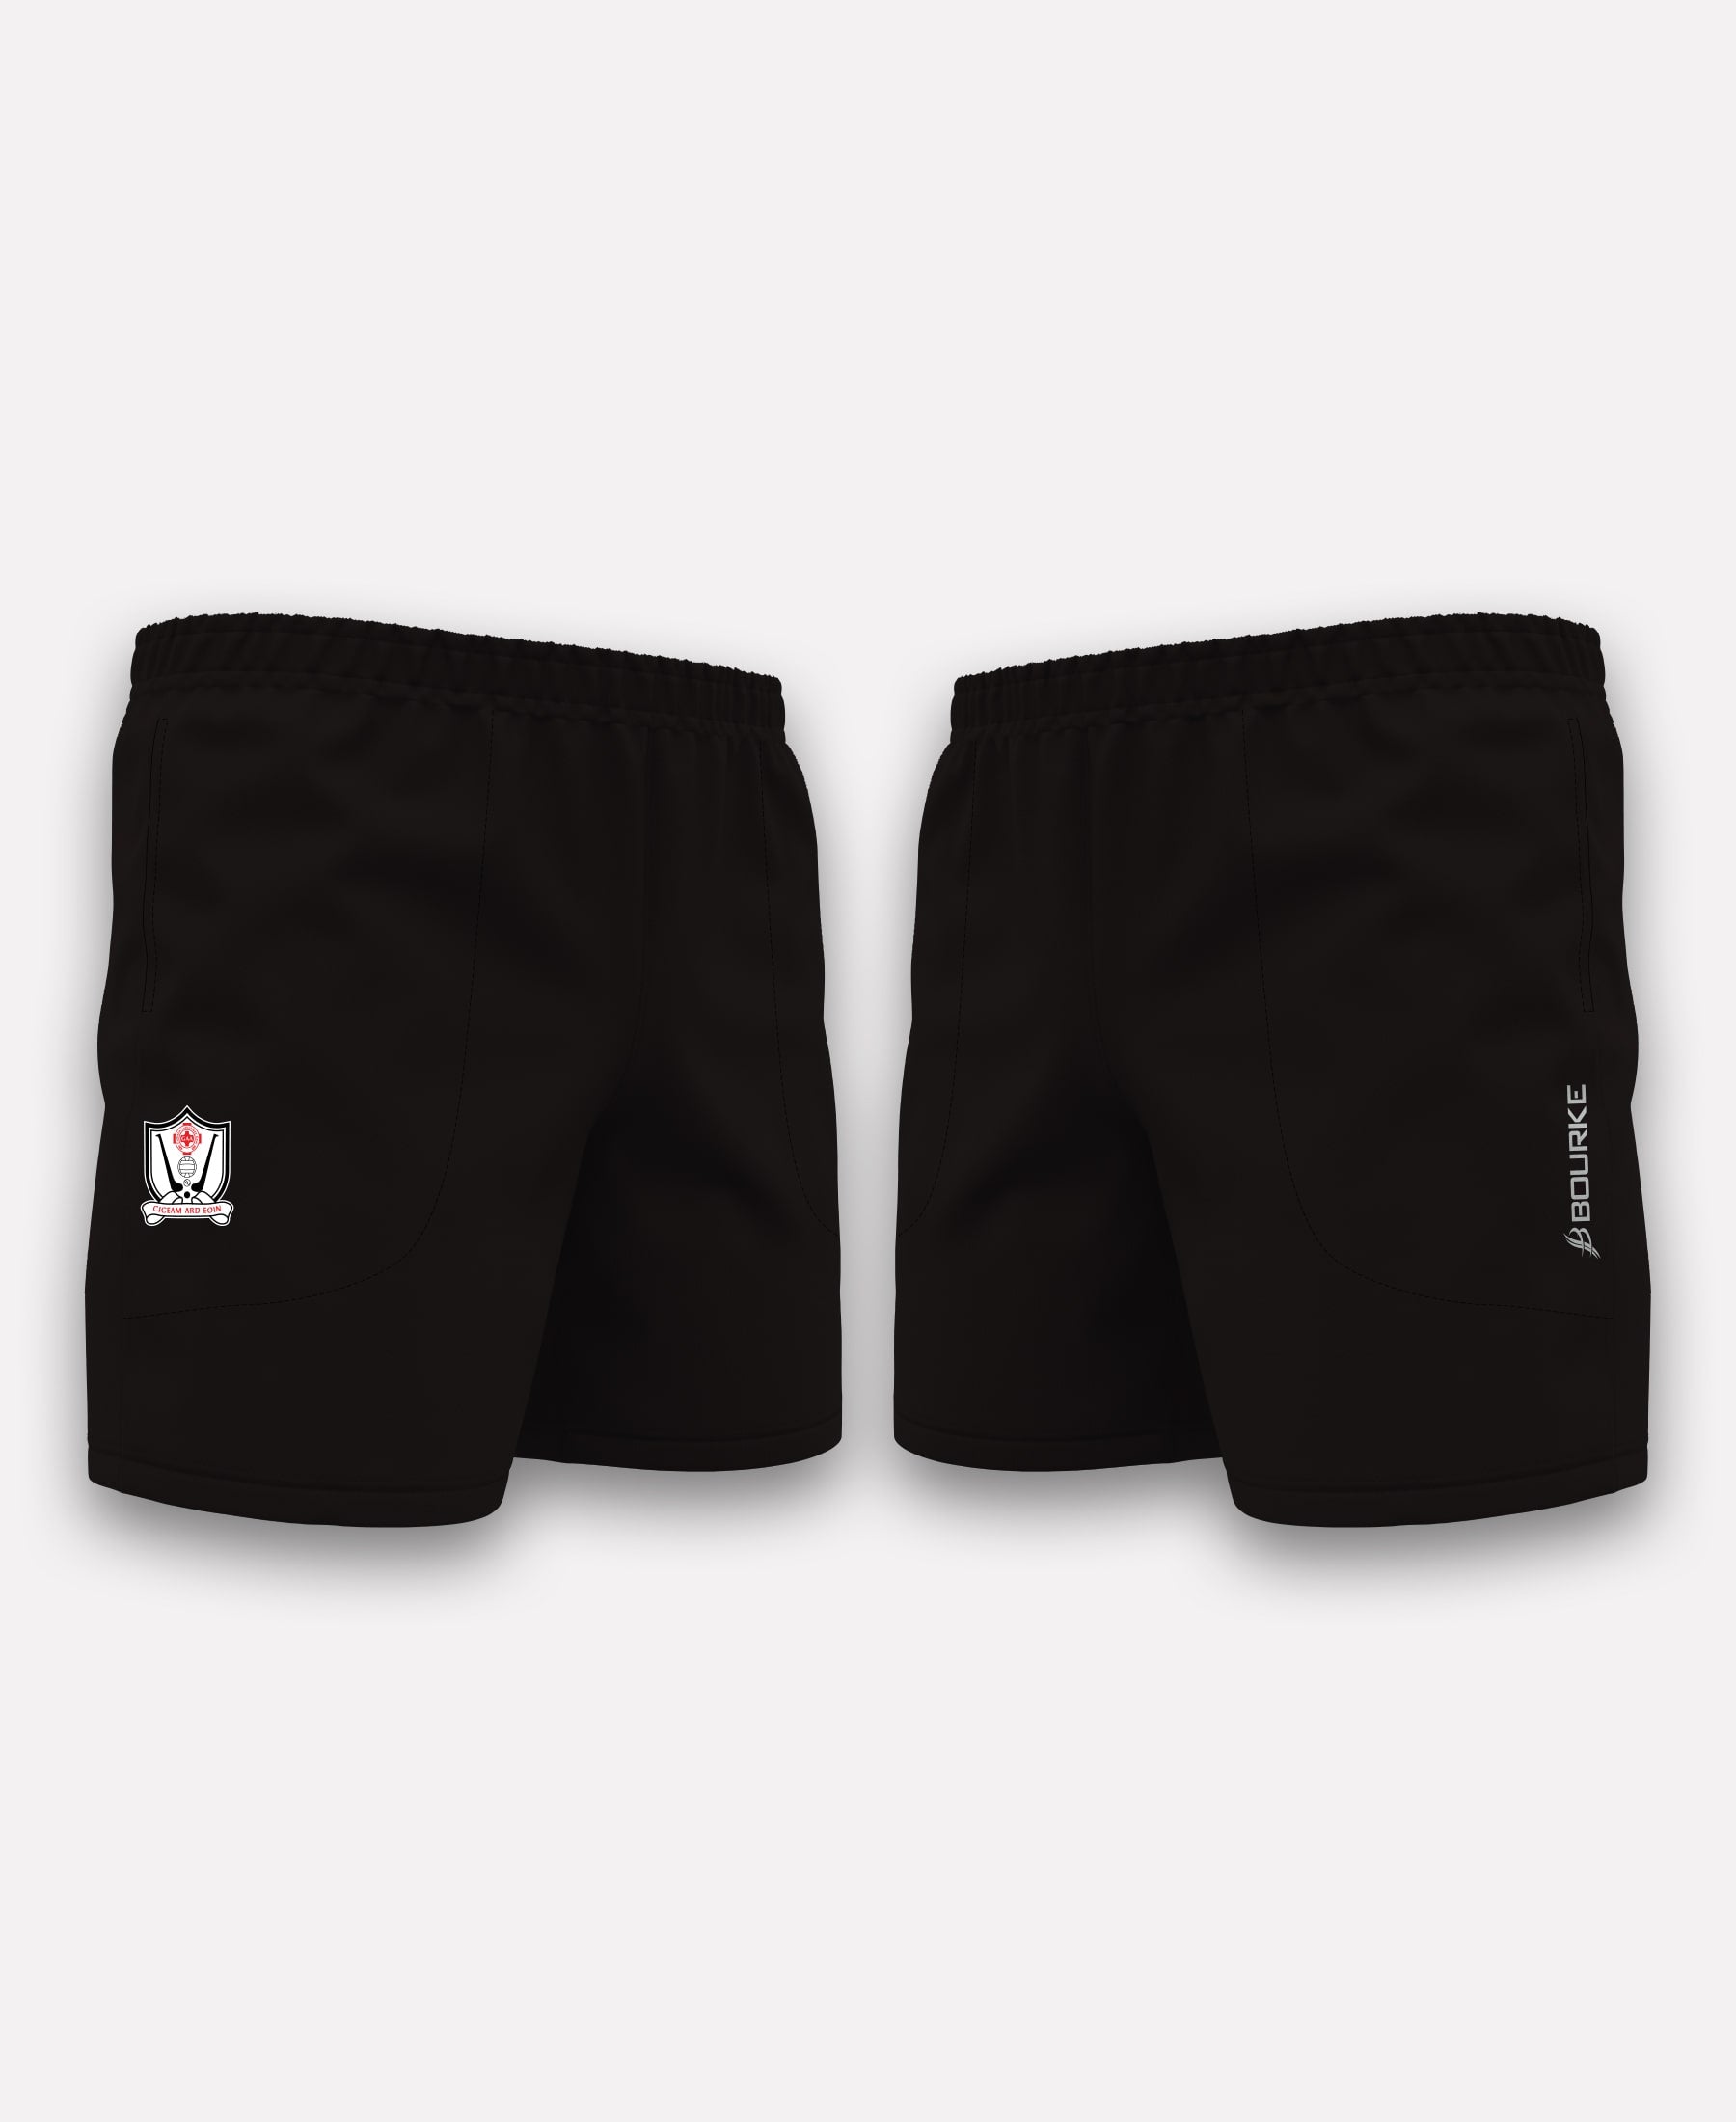 Ard Eoin Ciceam CLG TACA Gym Shorts (Black)